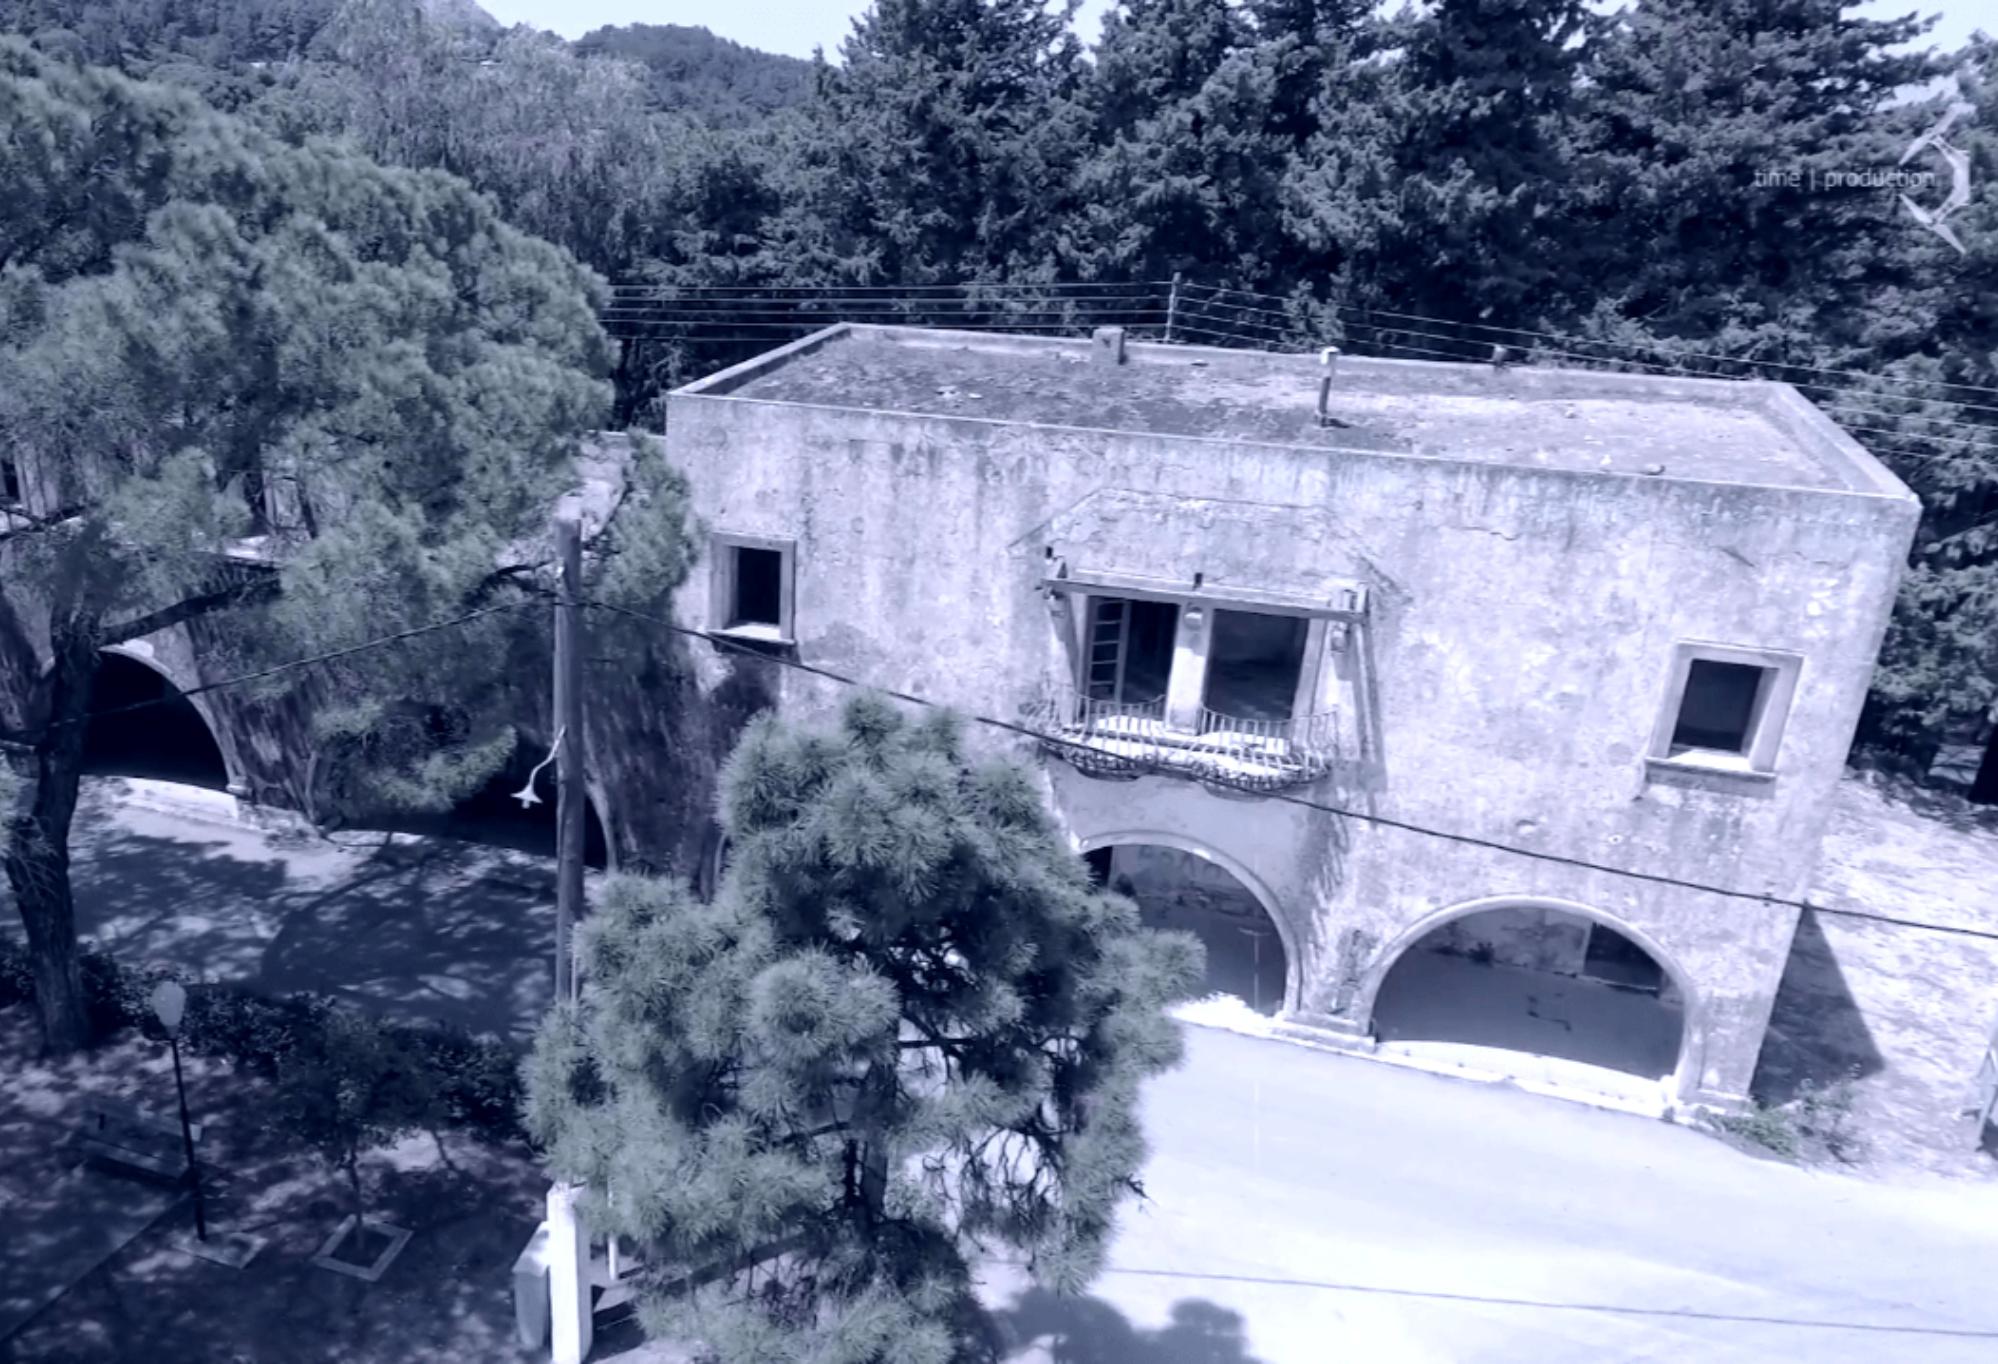 Campochiaro: Το Ελληνικό χωριό φάντασμα που μυρίζει θάνατο δεν πλησίαζε κανείς και ο χρόνος μοιάζει να σταμάτησε για πάντα